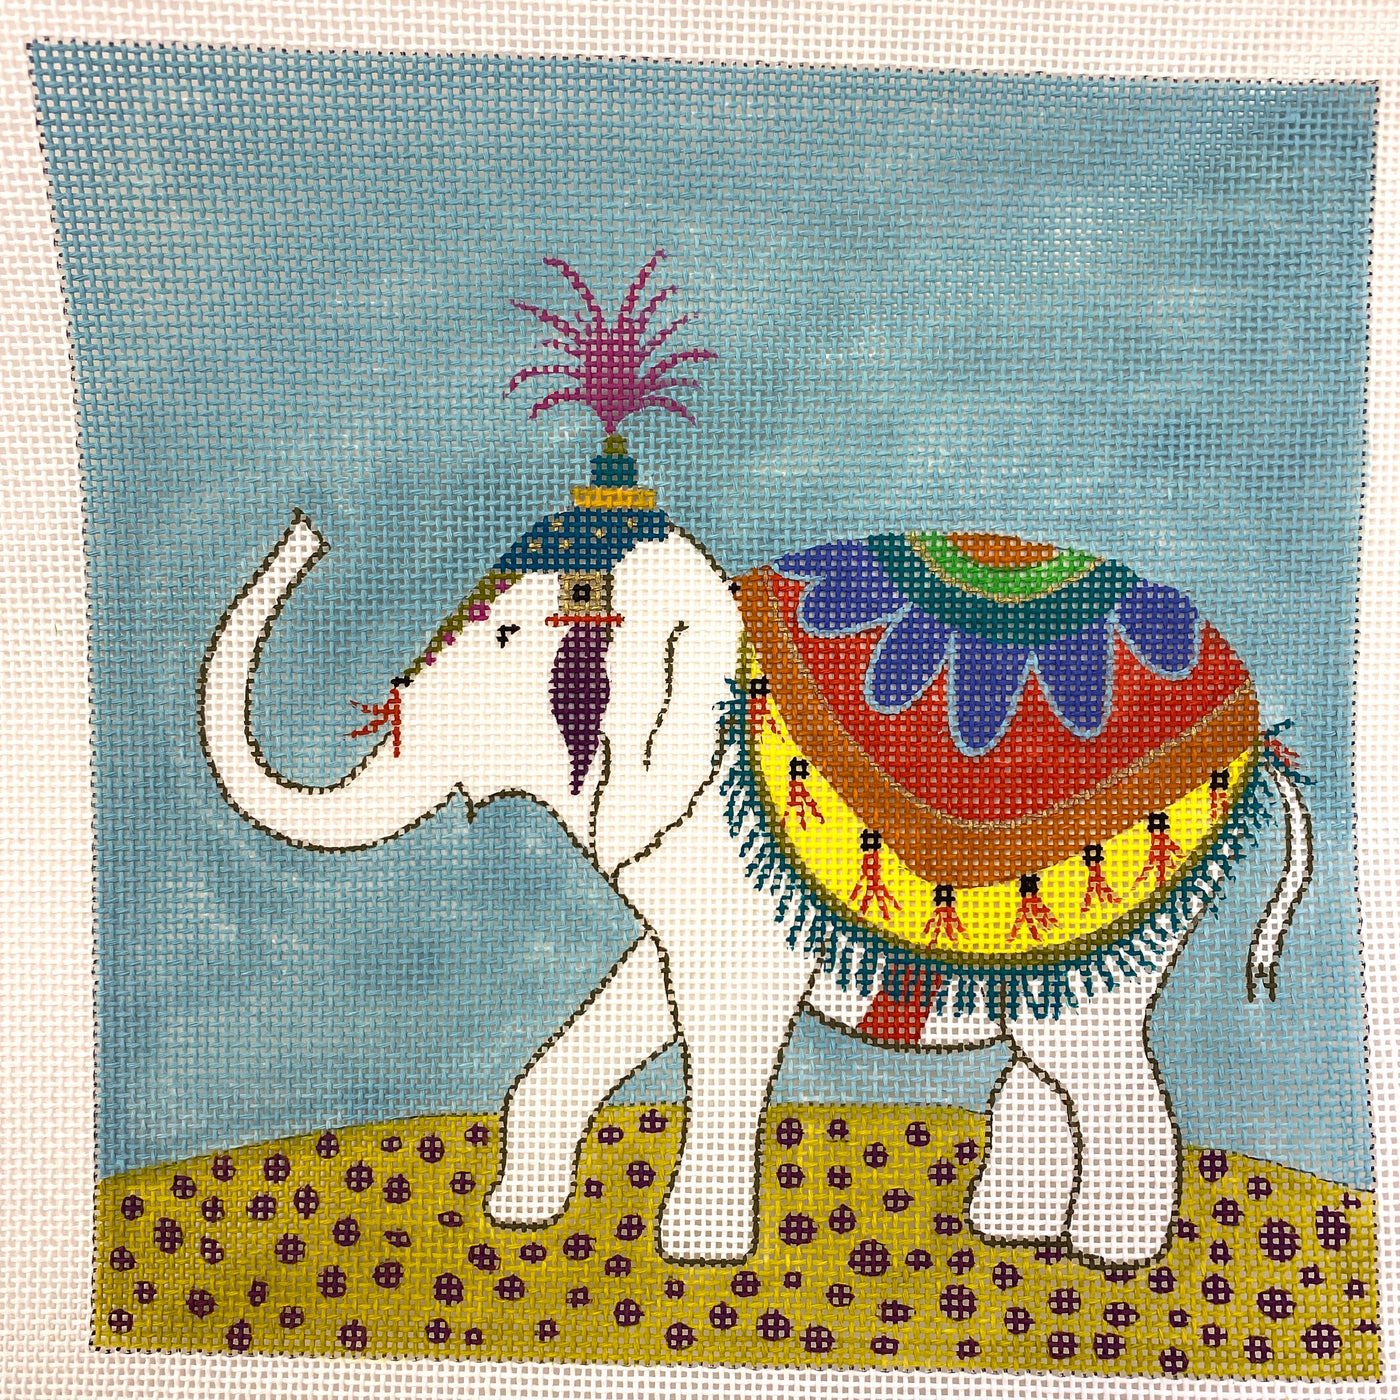 Elephant with Rainbow Blanket Needlepoint Canvas